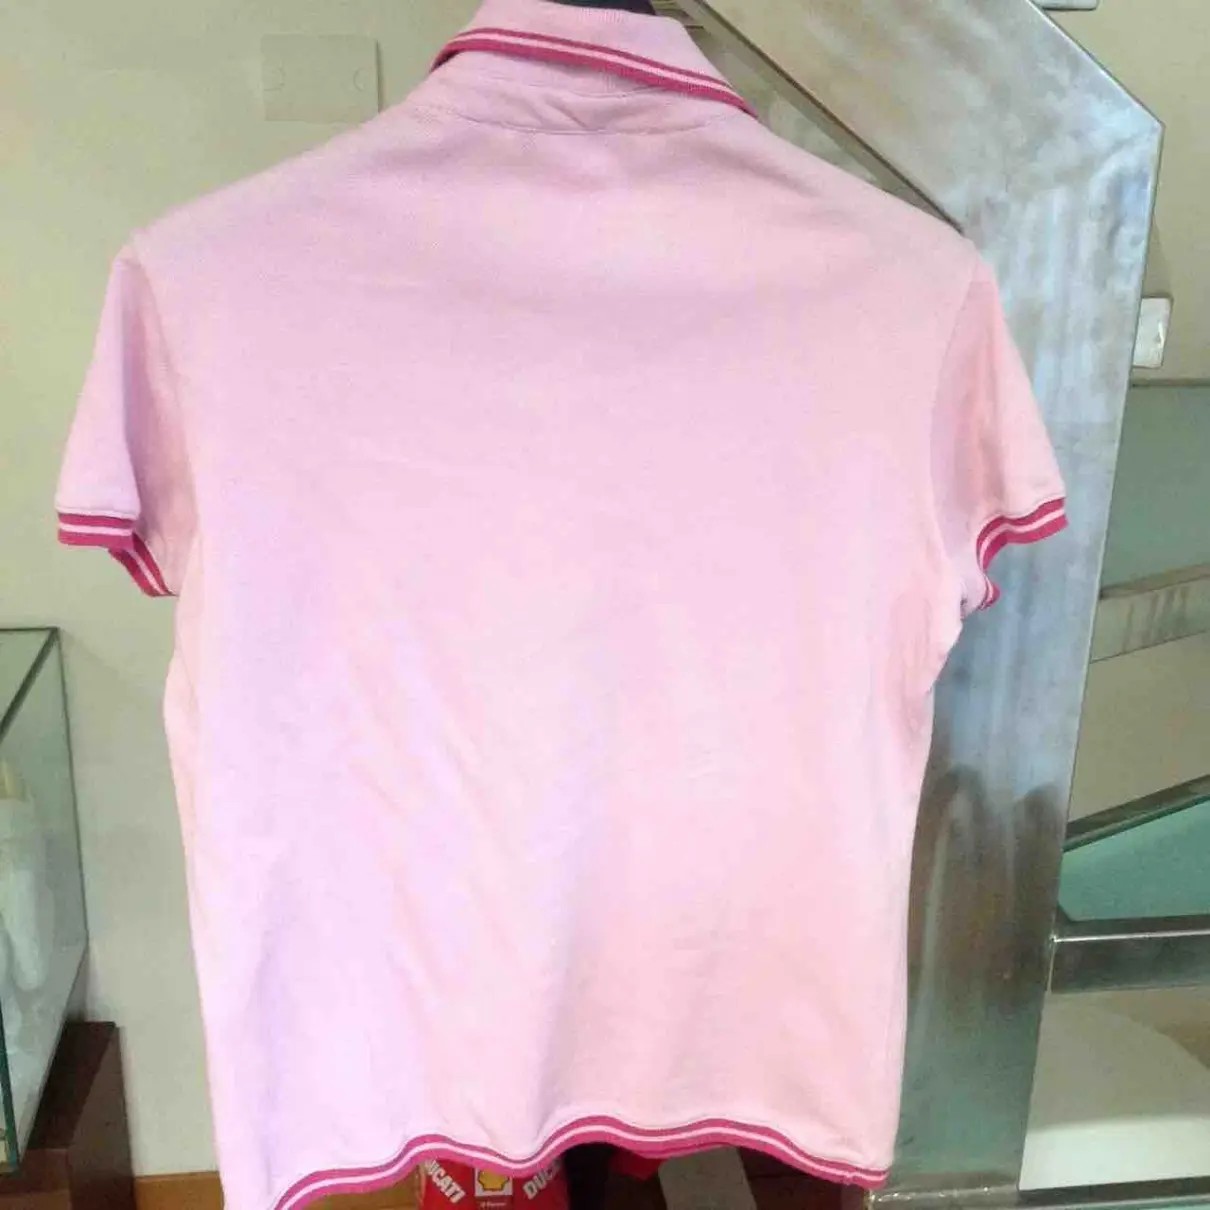 Dior Pink Cotton Top for sale - Vintage